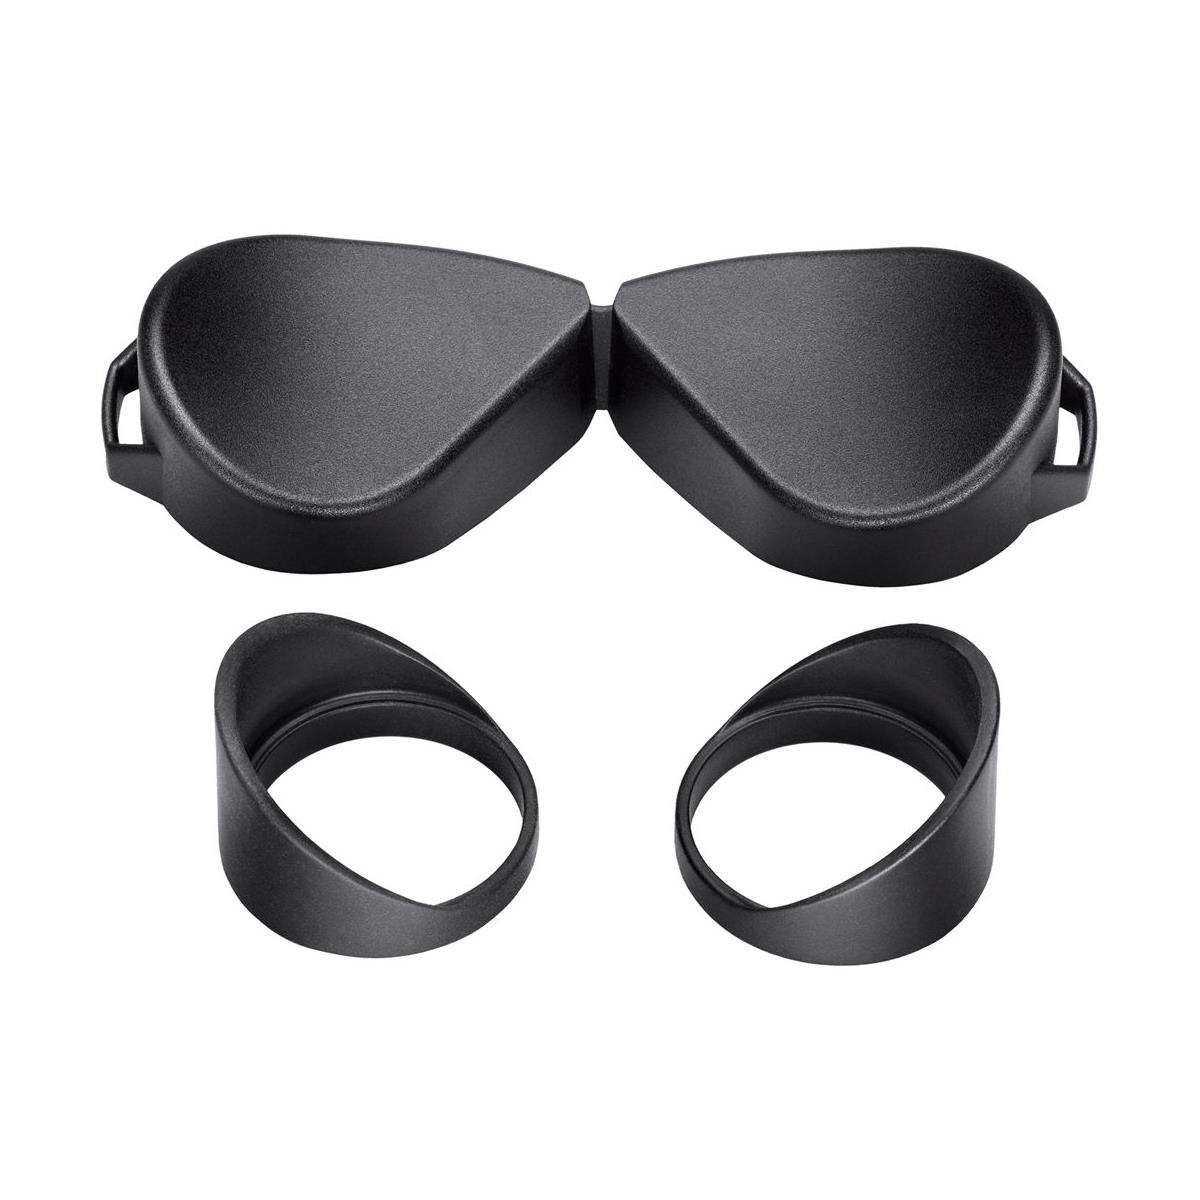 Image of Swarovski Optik Swarovski Winged Eyecup Rainguard Set for EL/SLC